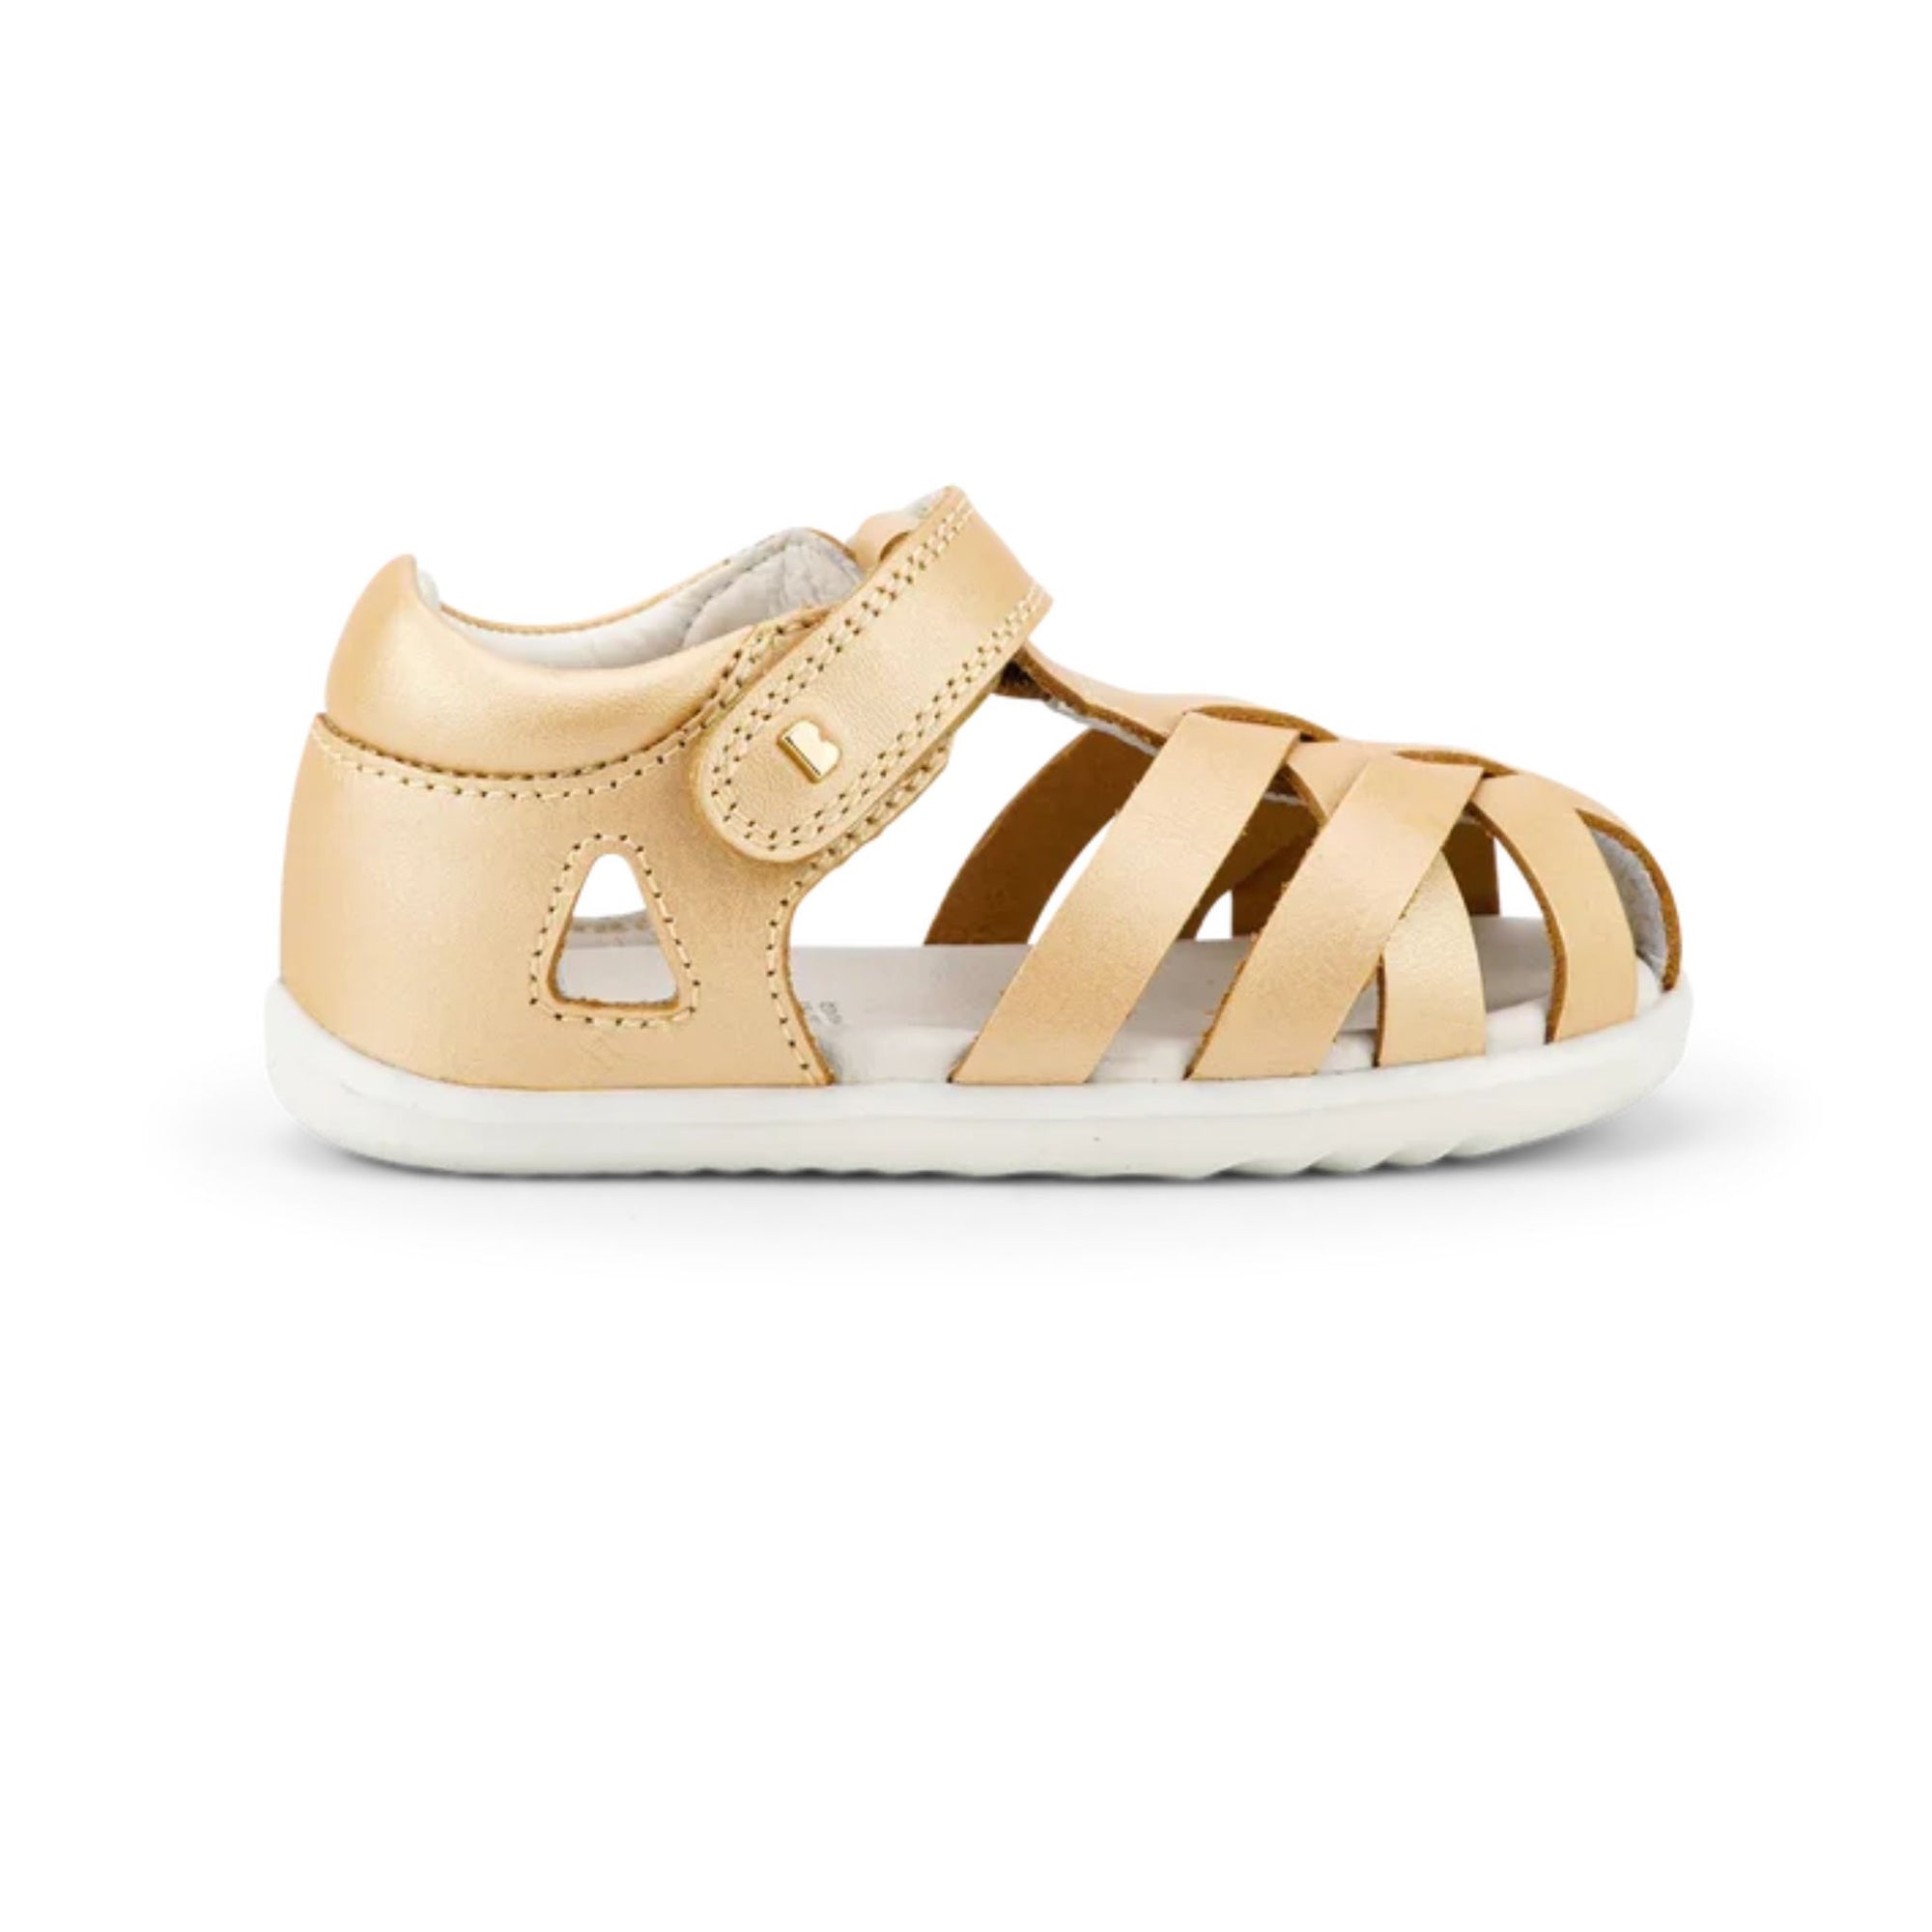 Bobux Pale Gold Tropicana II Sandals Step Up